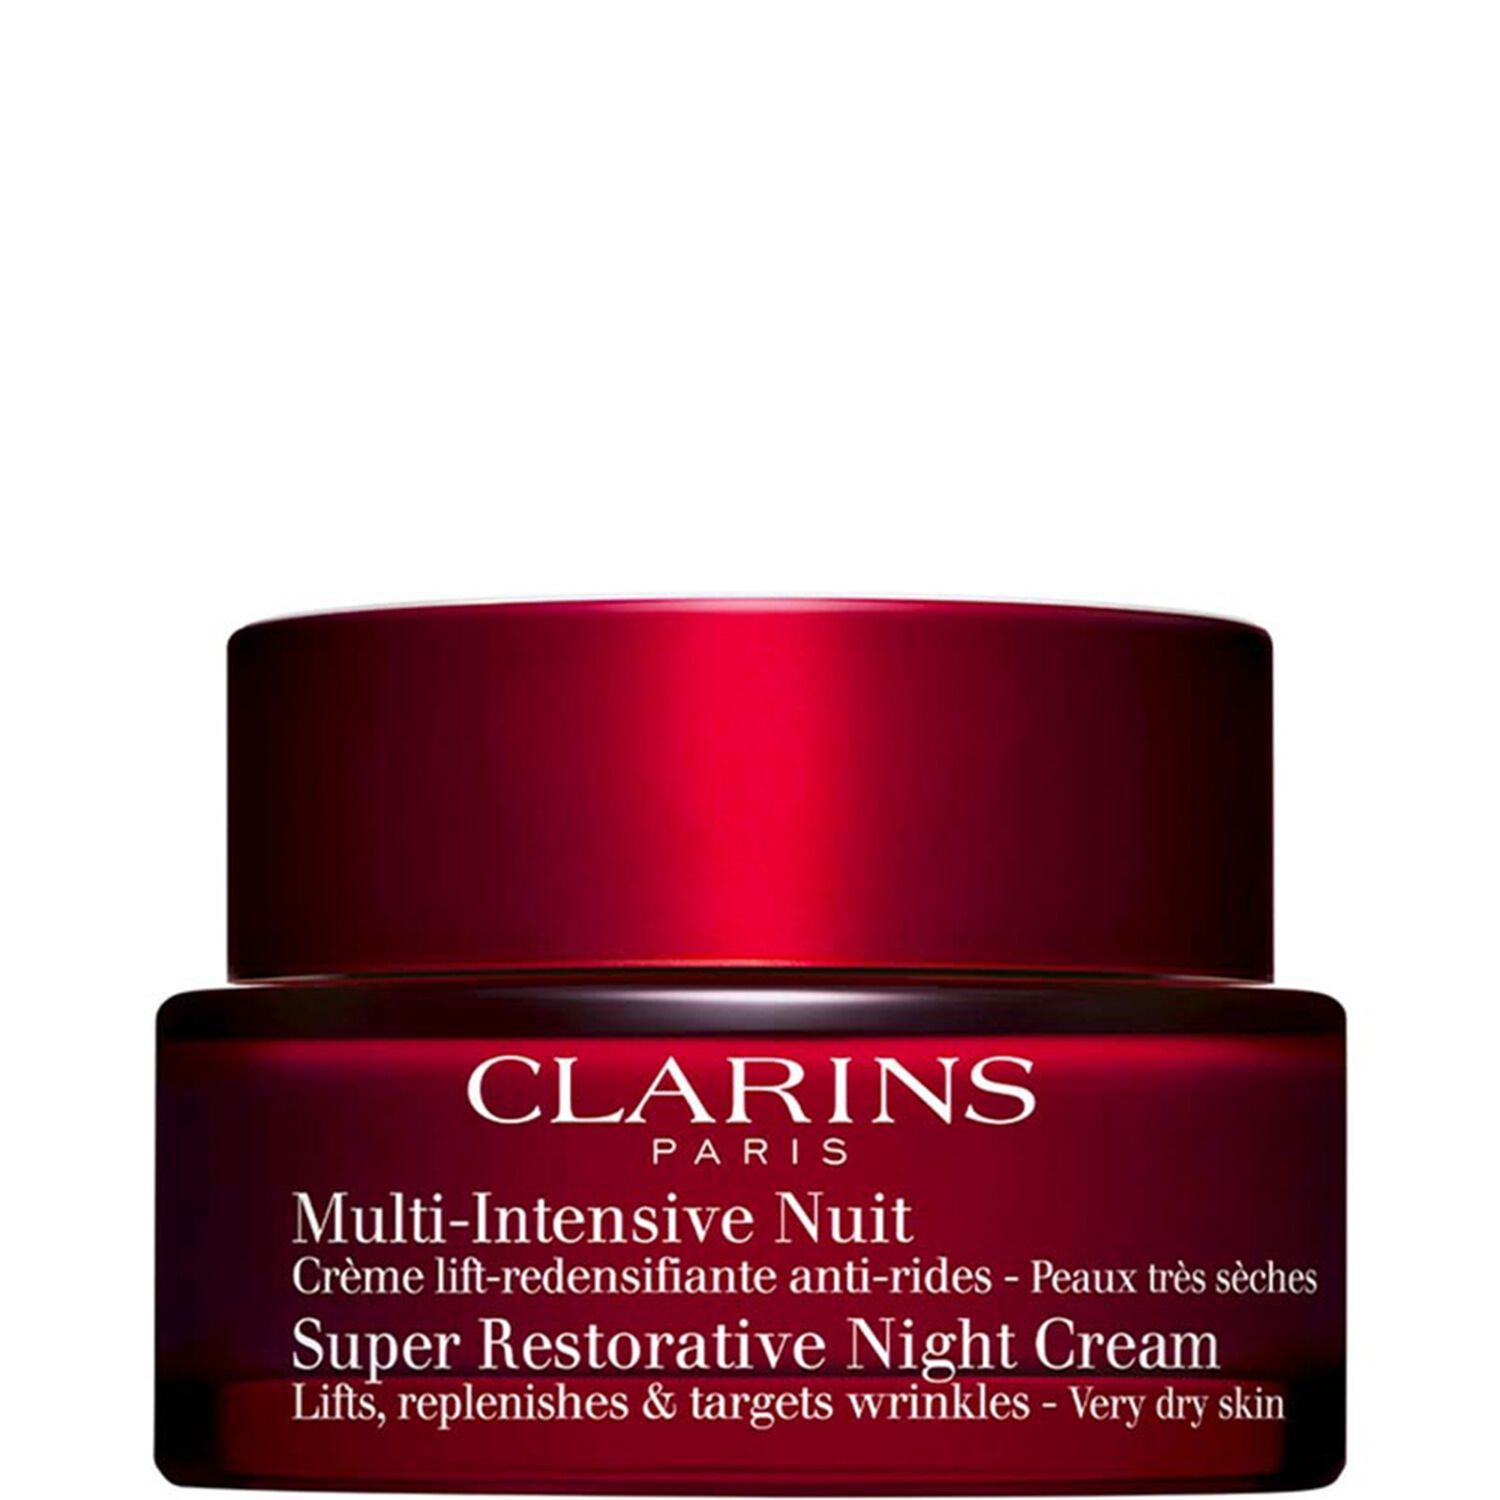 Clarins - Multi-Intensive Nuit Crème lift-redensifiante anti-rides